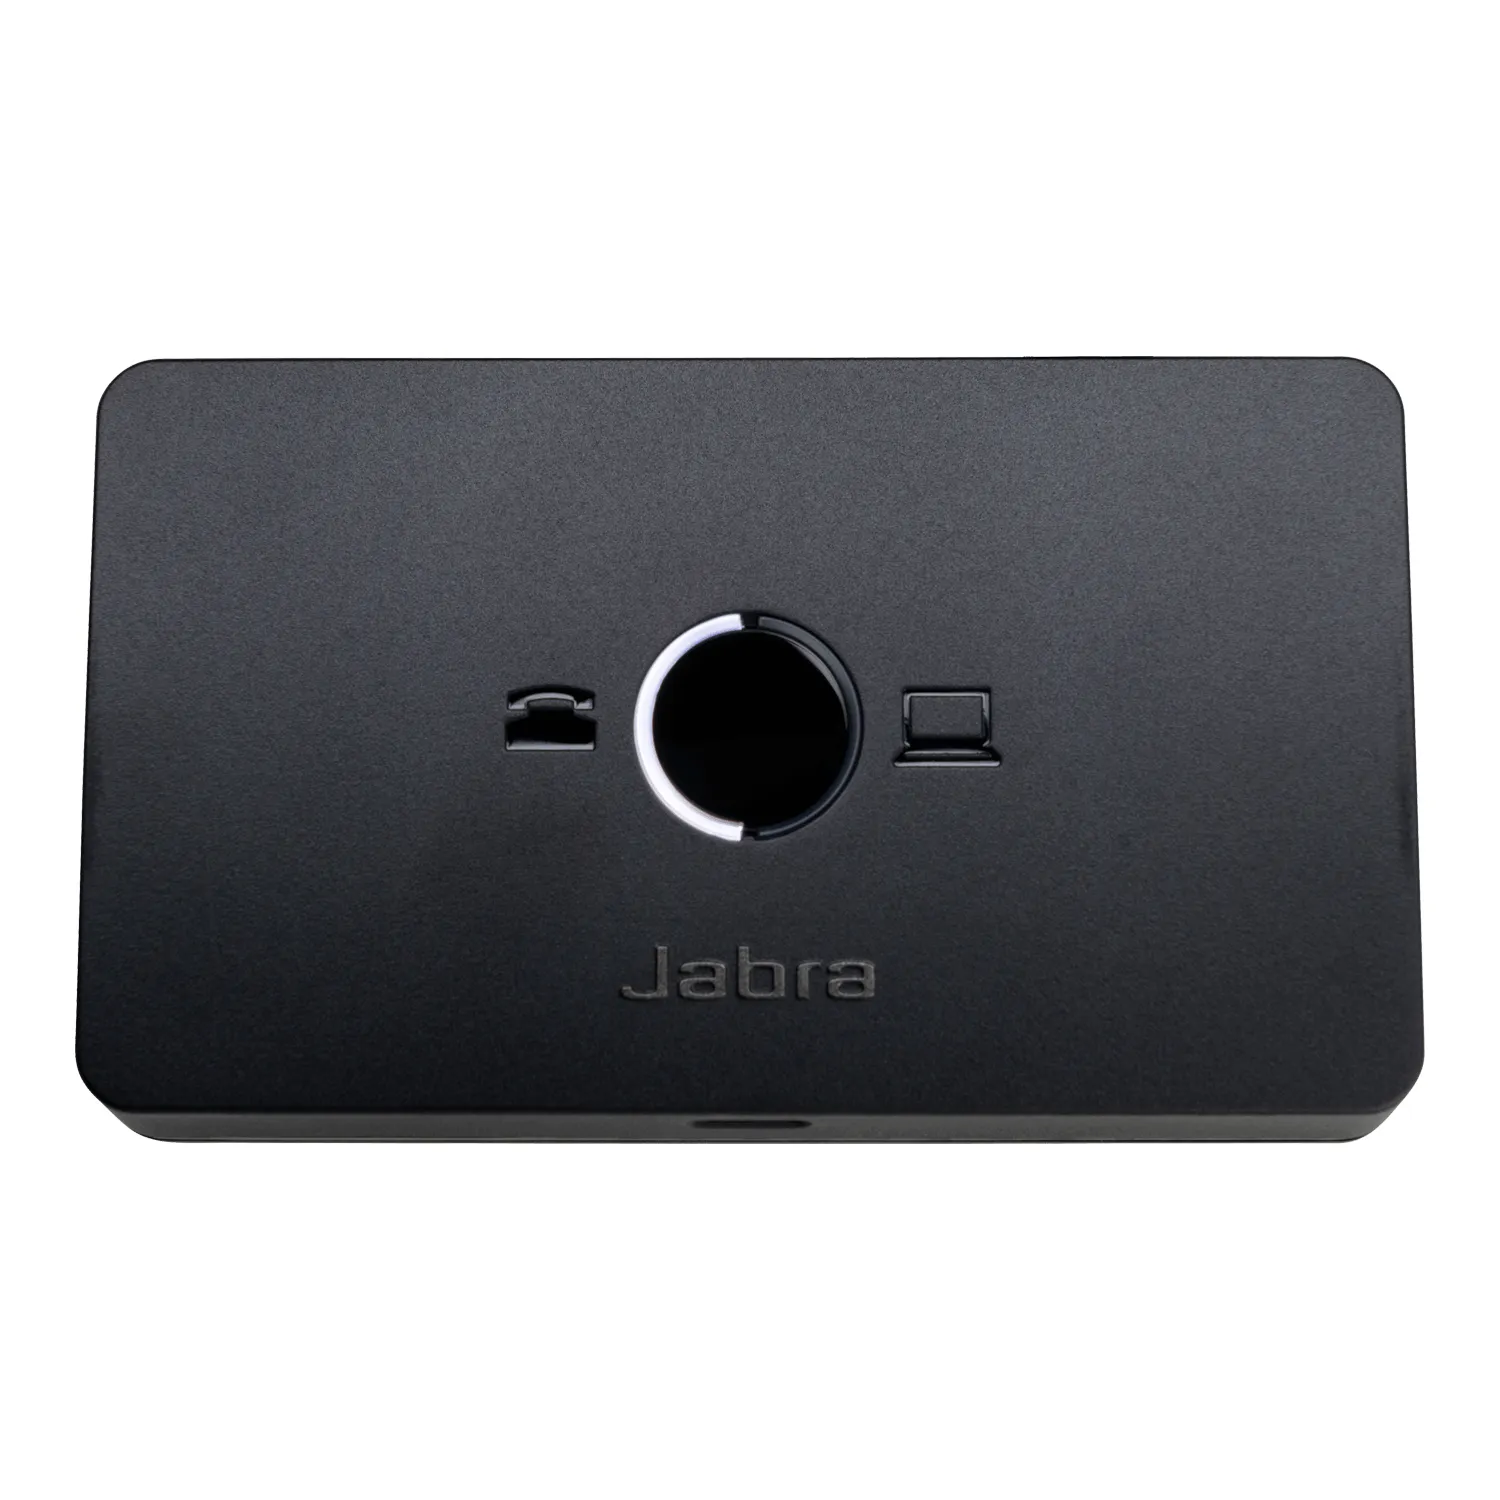 Vente Jabra Link 950 Jabra au meilleur prix - visuel 4